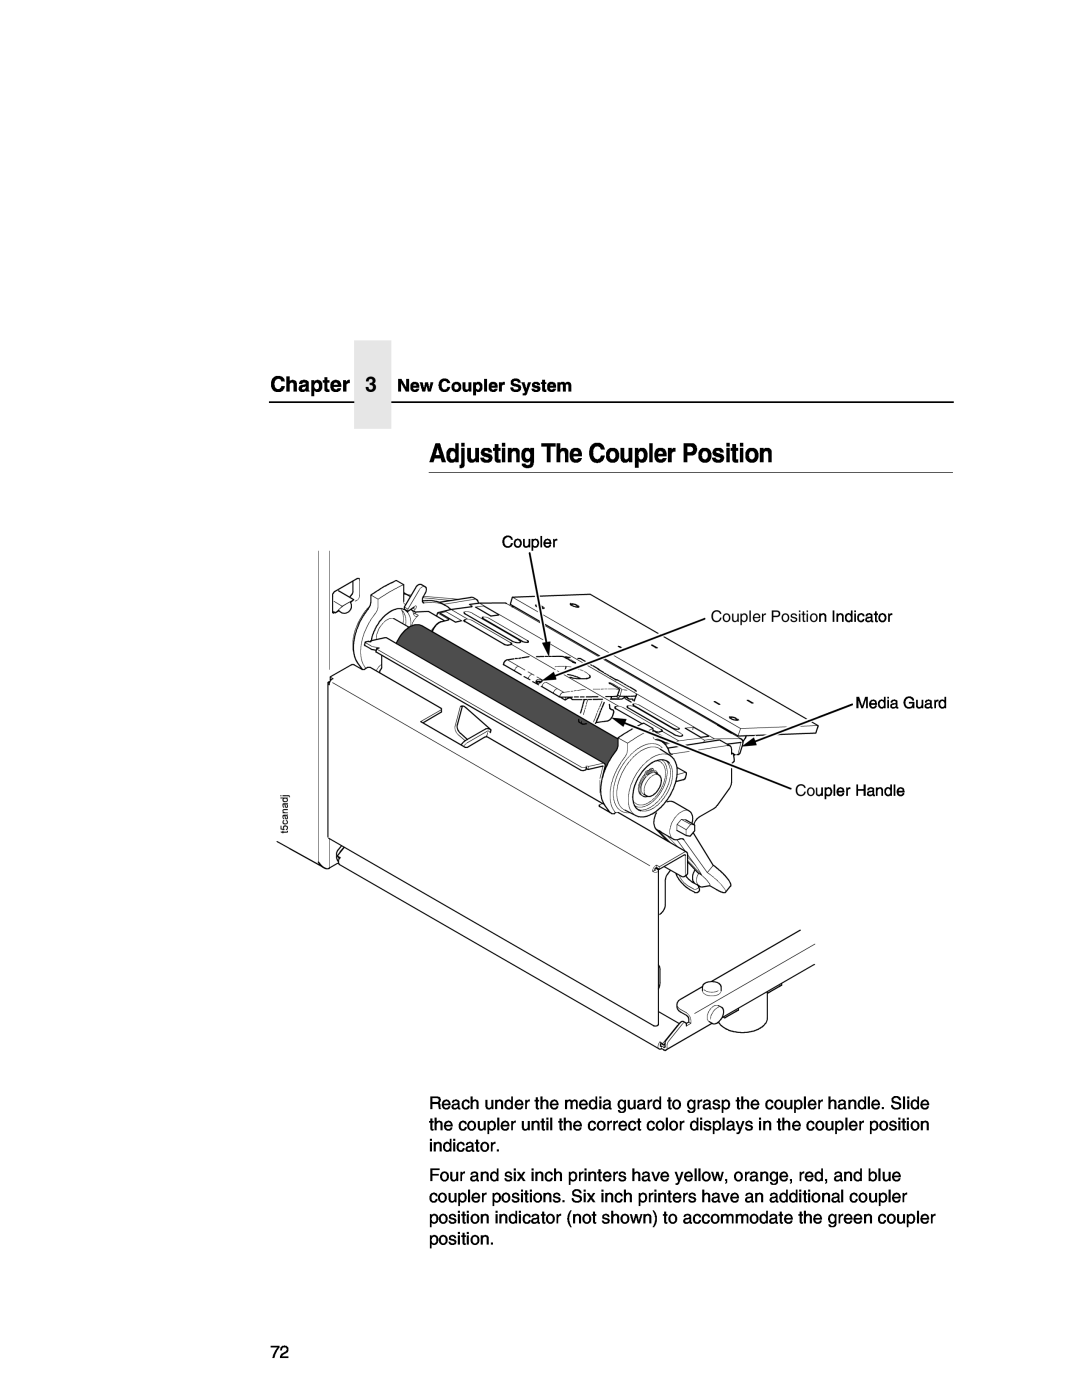 Printronix SL5000r MP manual Adjusting The Coupler Position, New Coupler System 